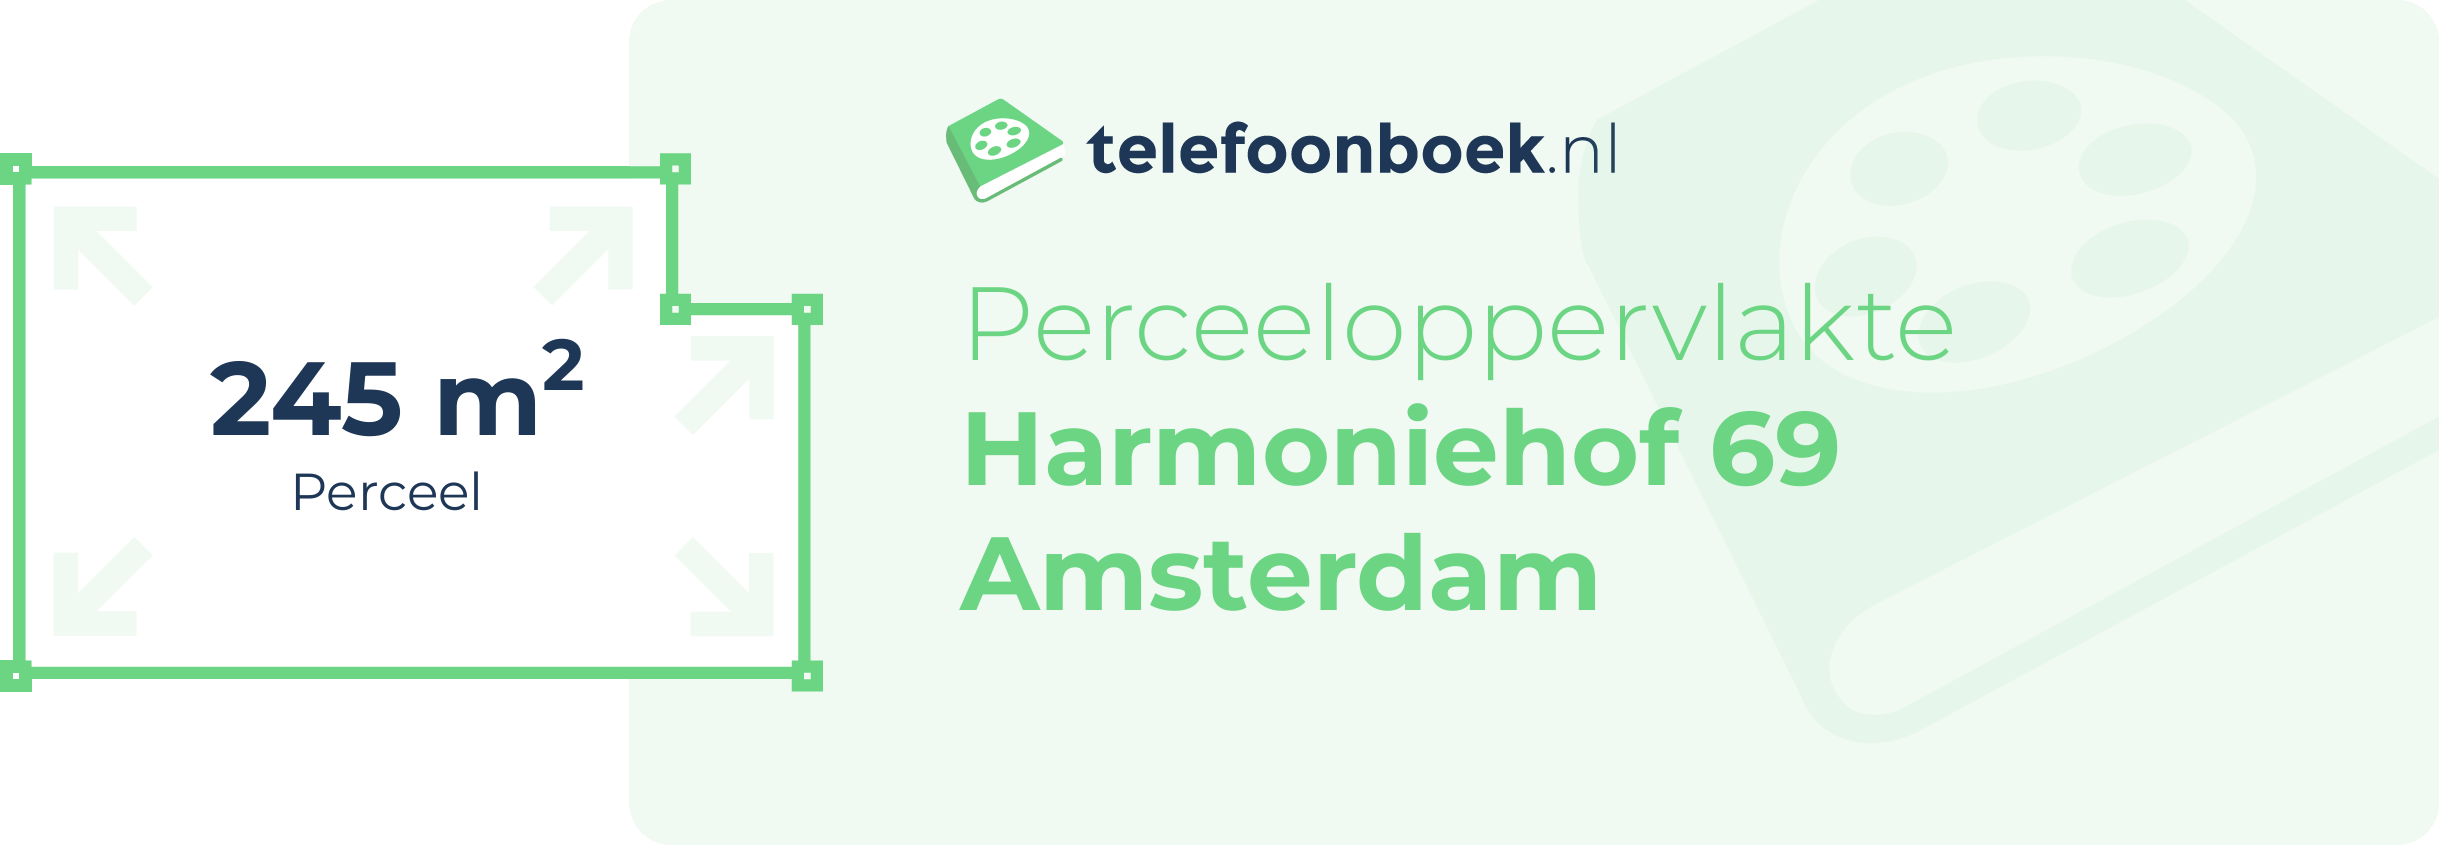 Perceeloppervlakte Harmoniehof 69 Amsterdam